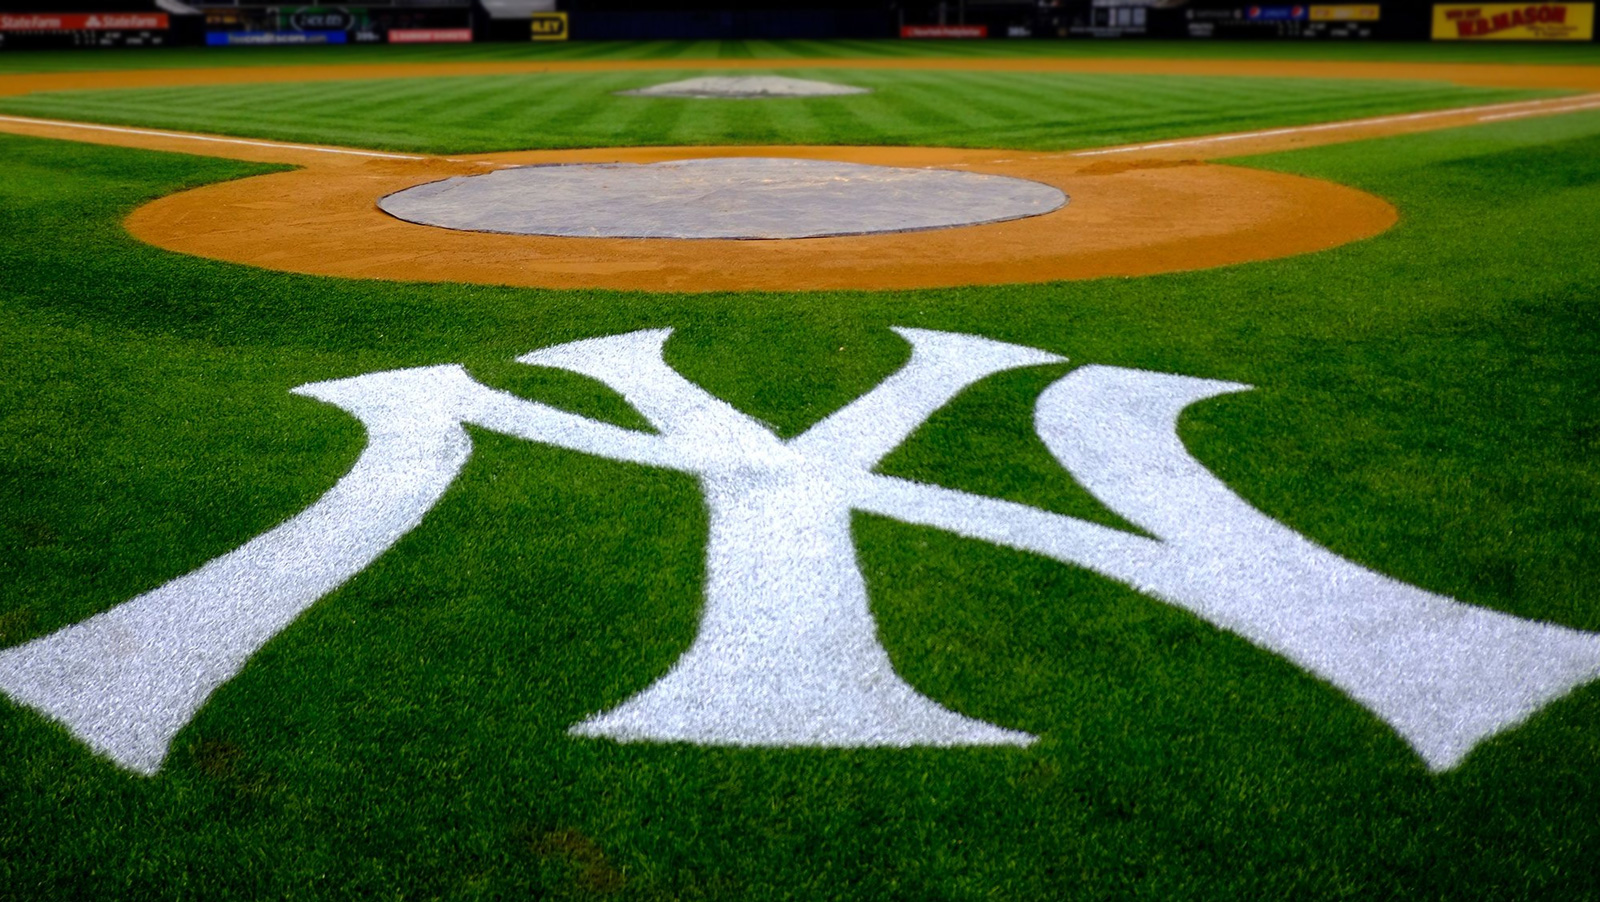 World series odds update: Yankees the June betting favorites